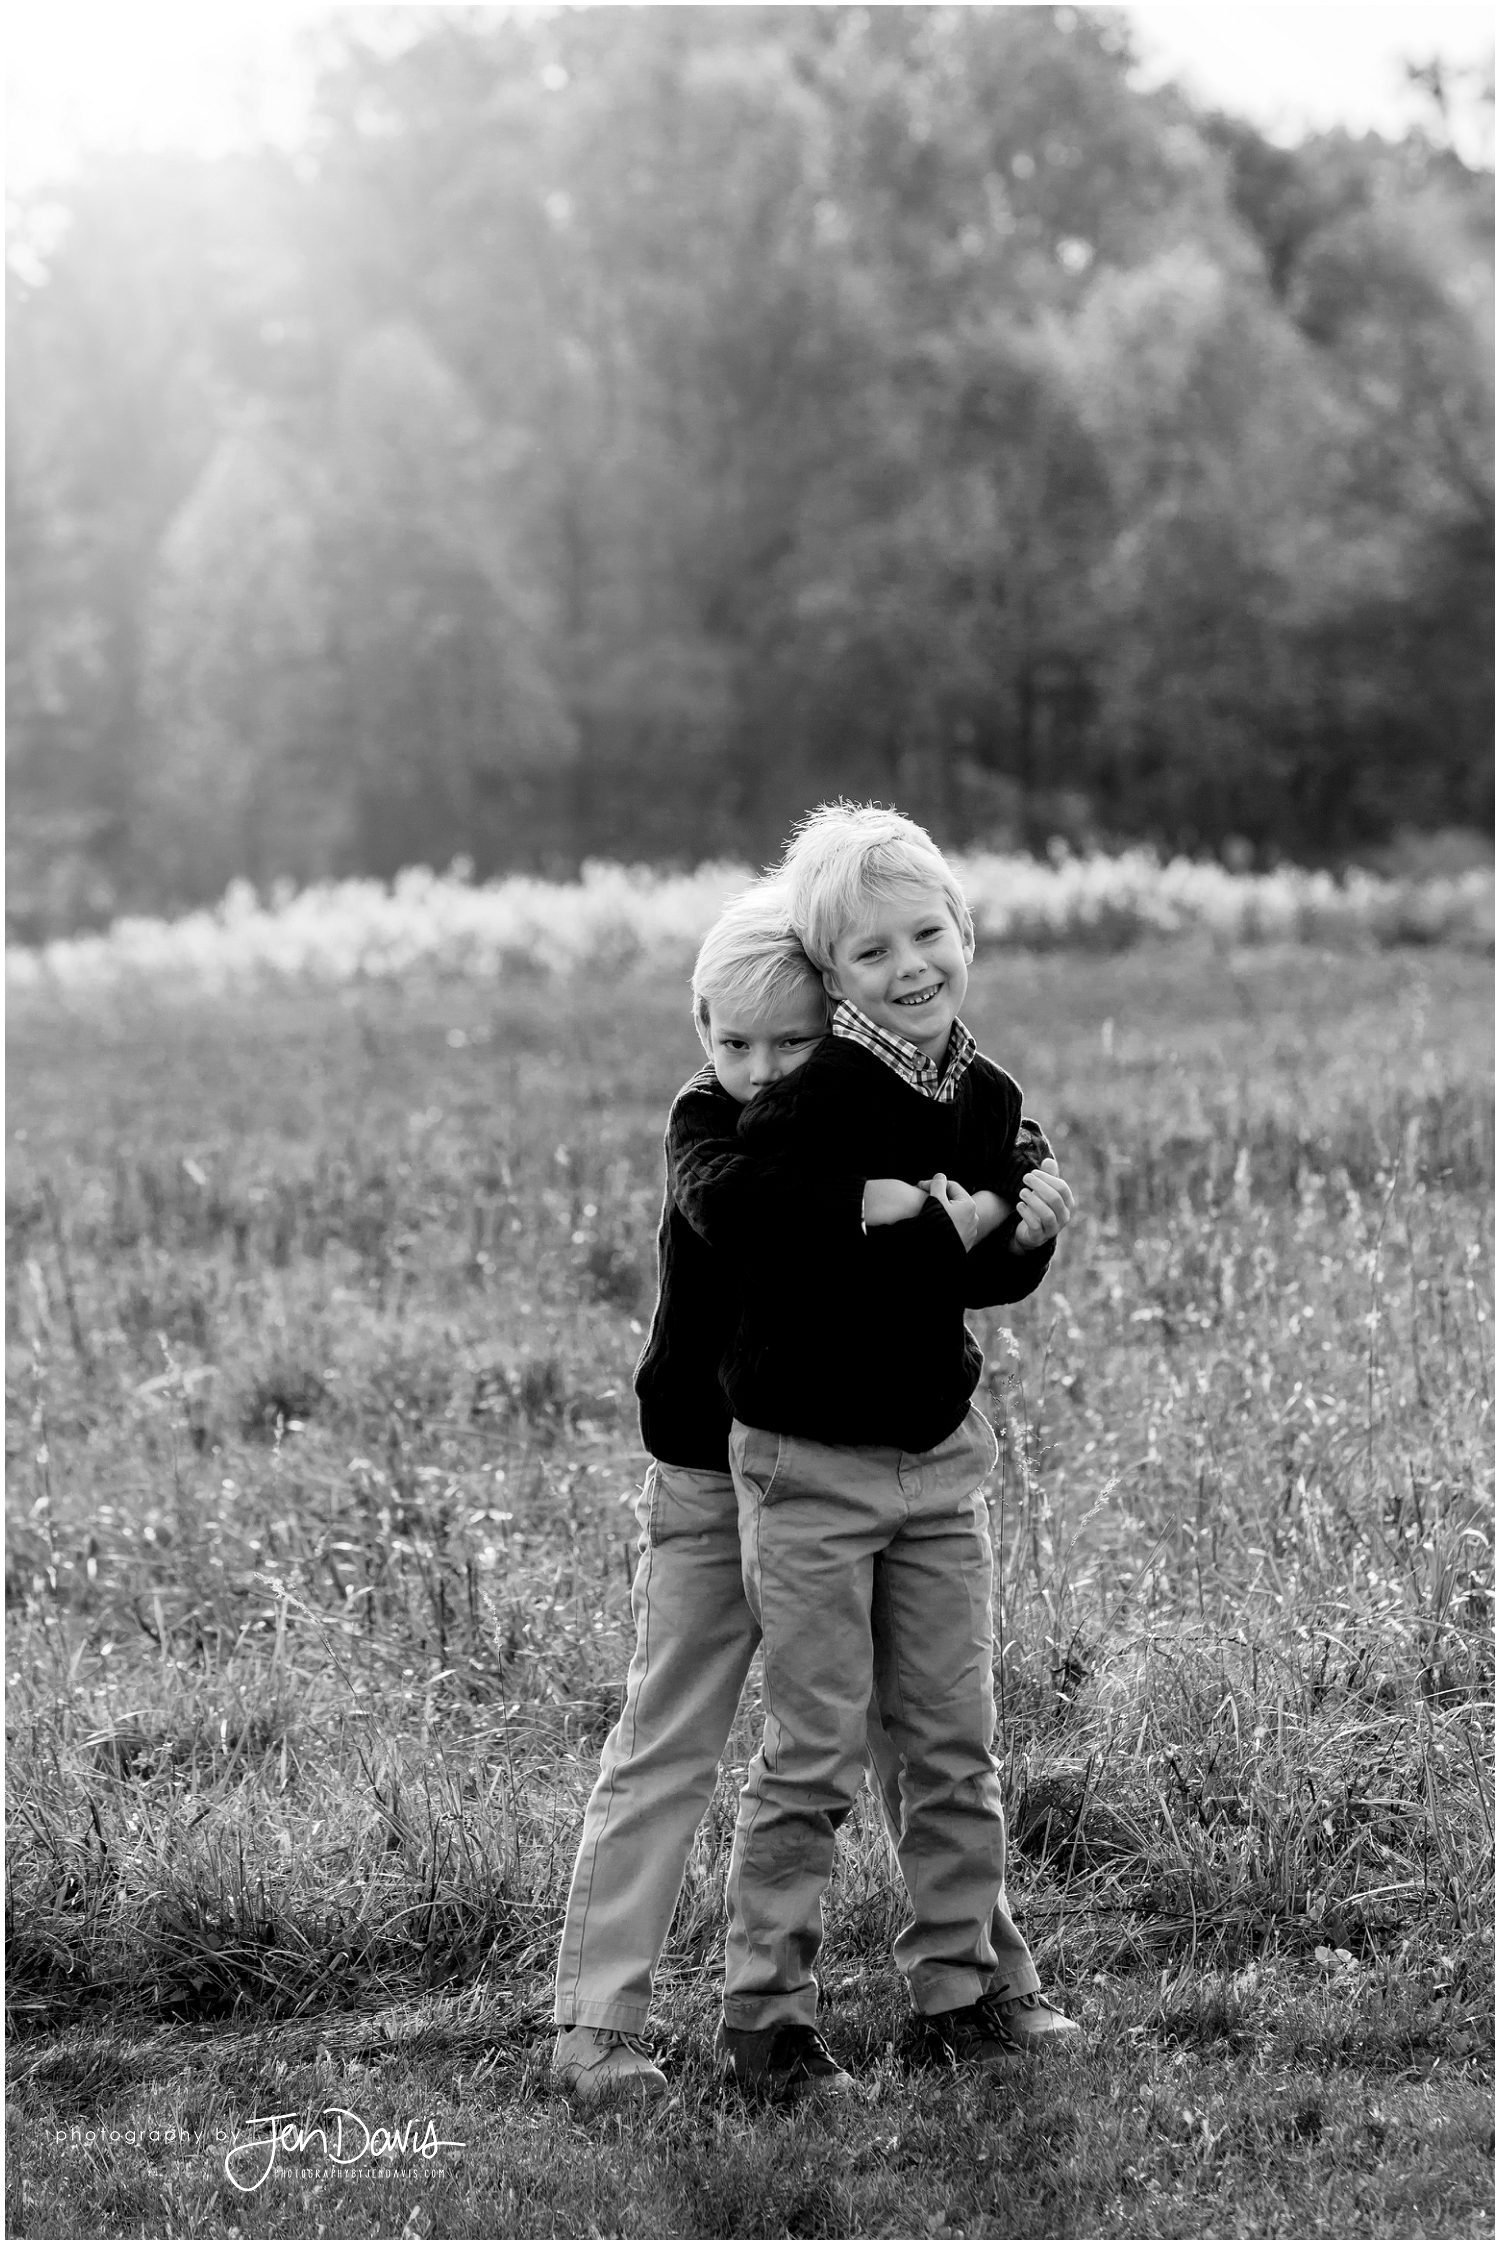 Siblings playing in a meadow